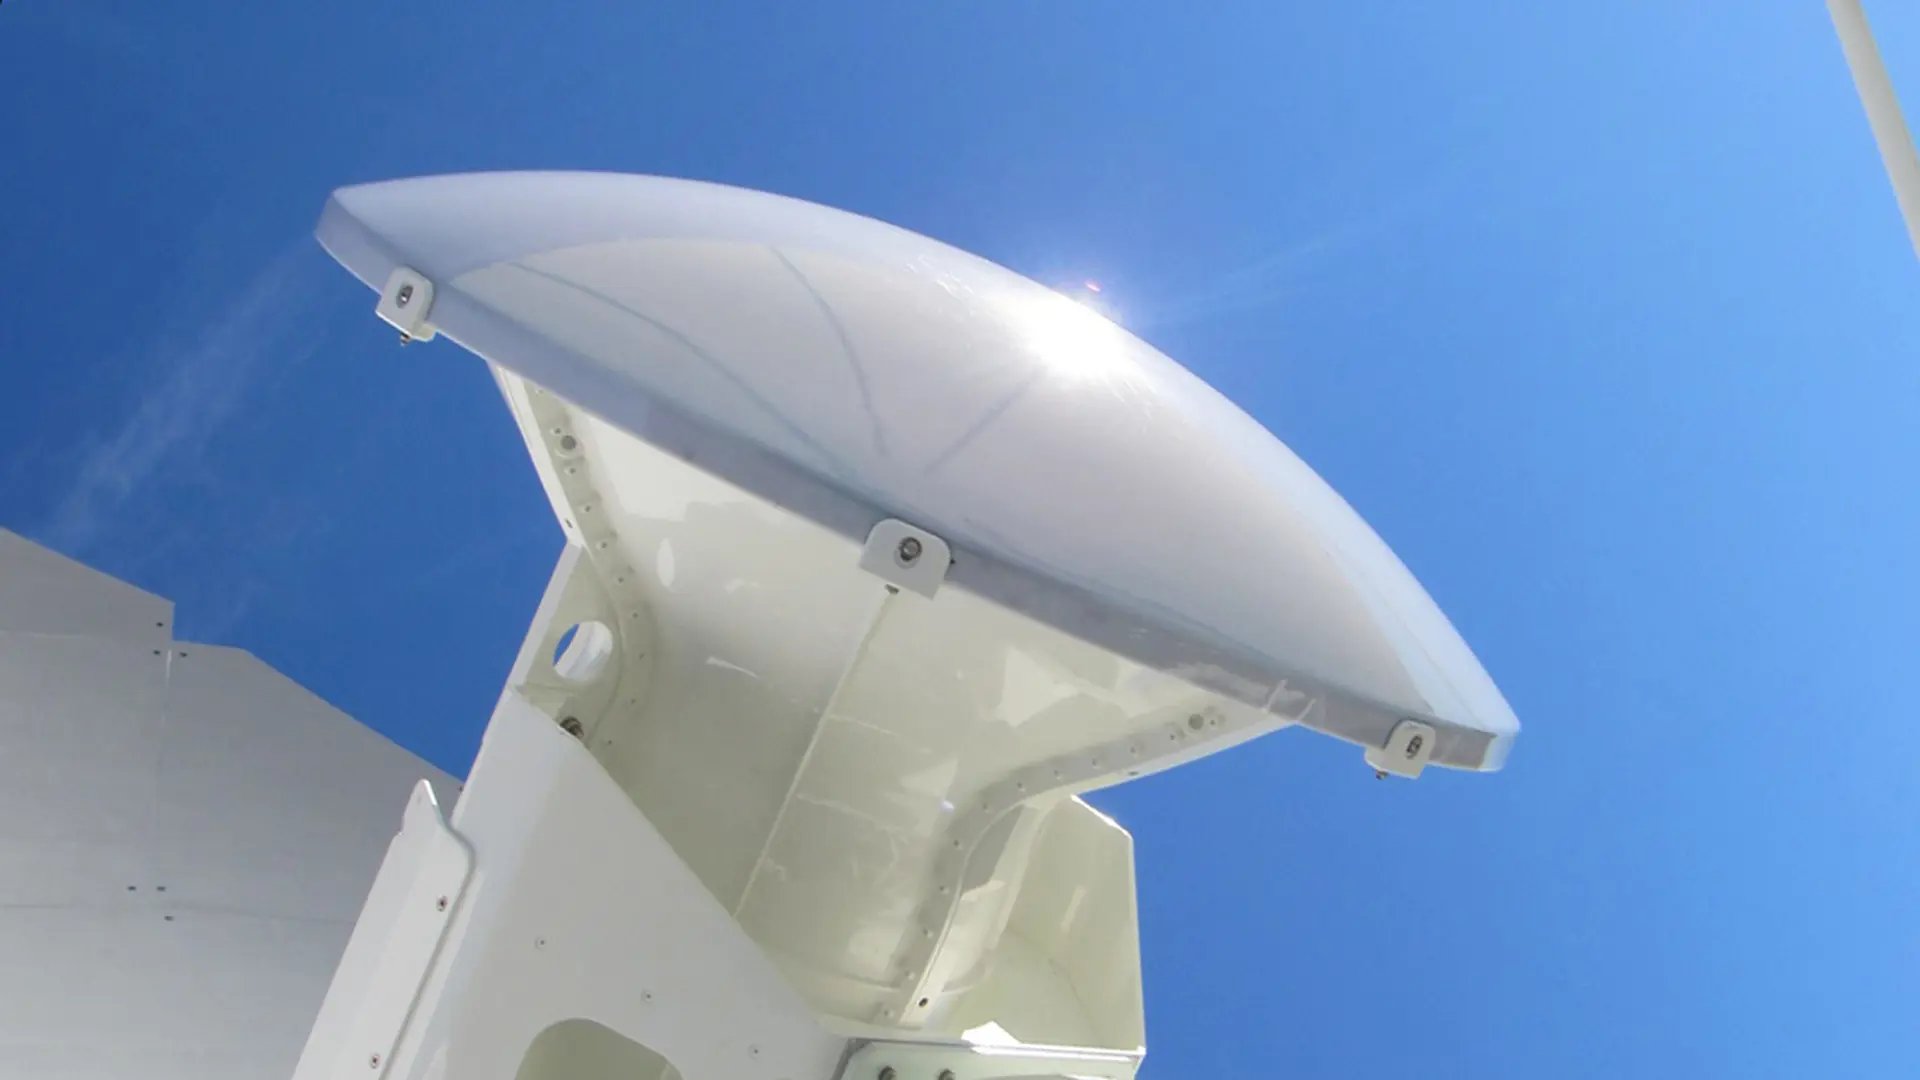 Receiver mounted on radio telescope 